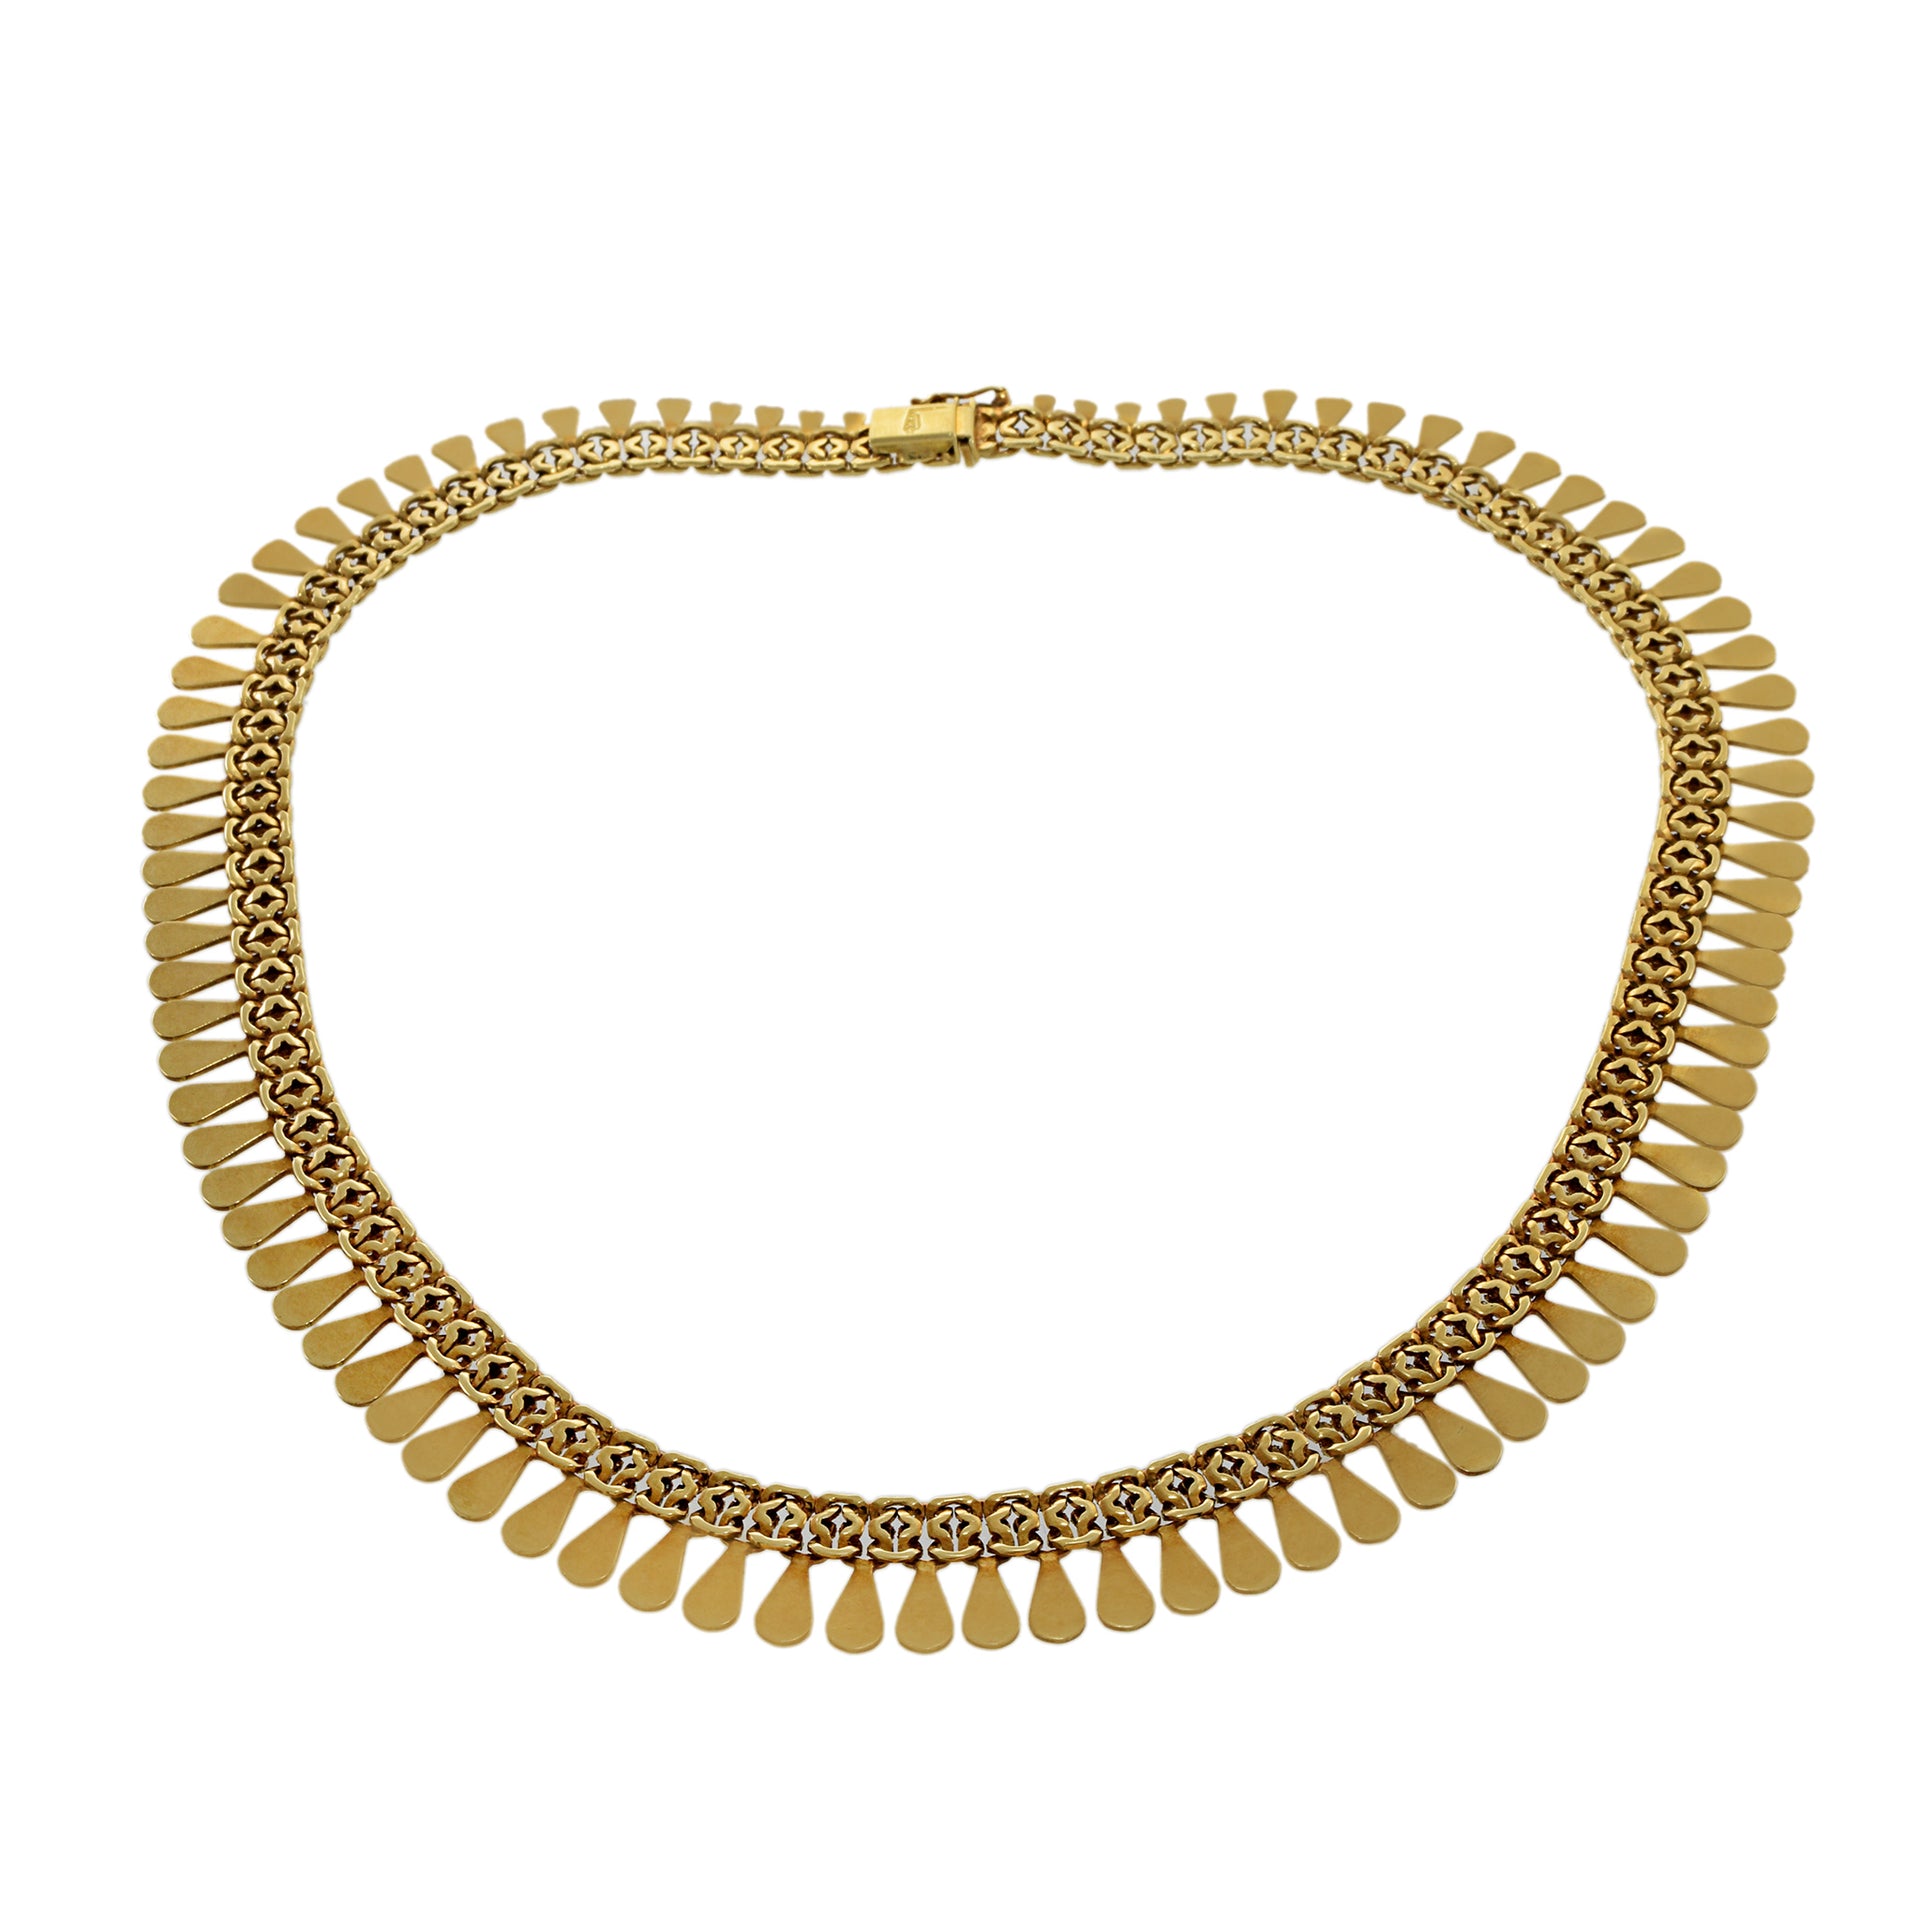 Antique Victorian Era 18KT Yellow Gold Cleopatra Bib Necklace